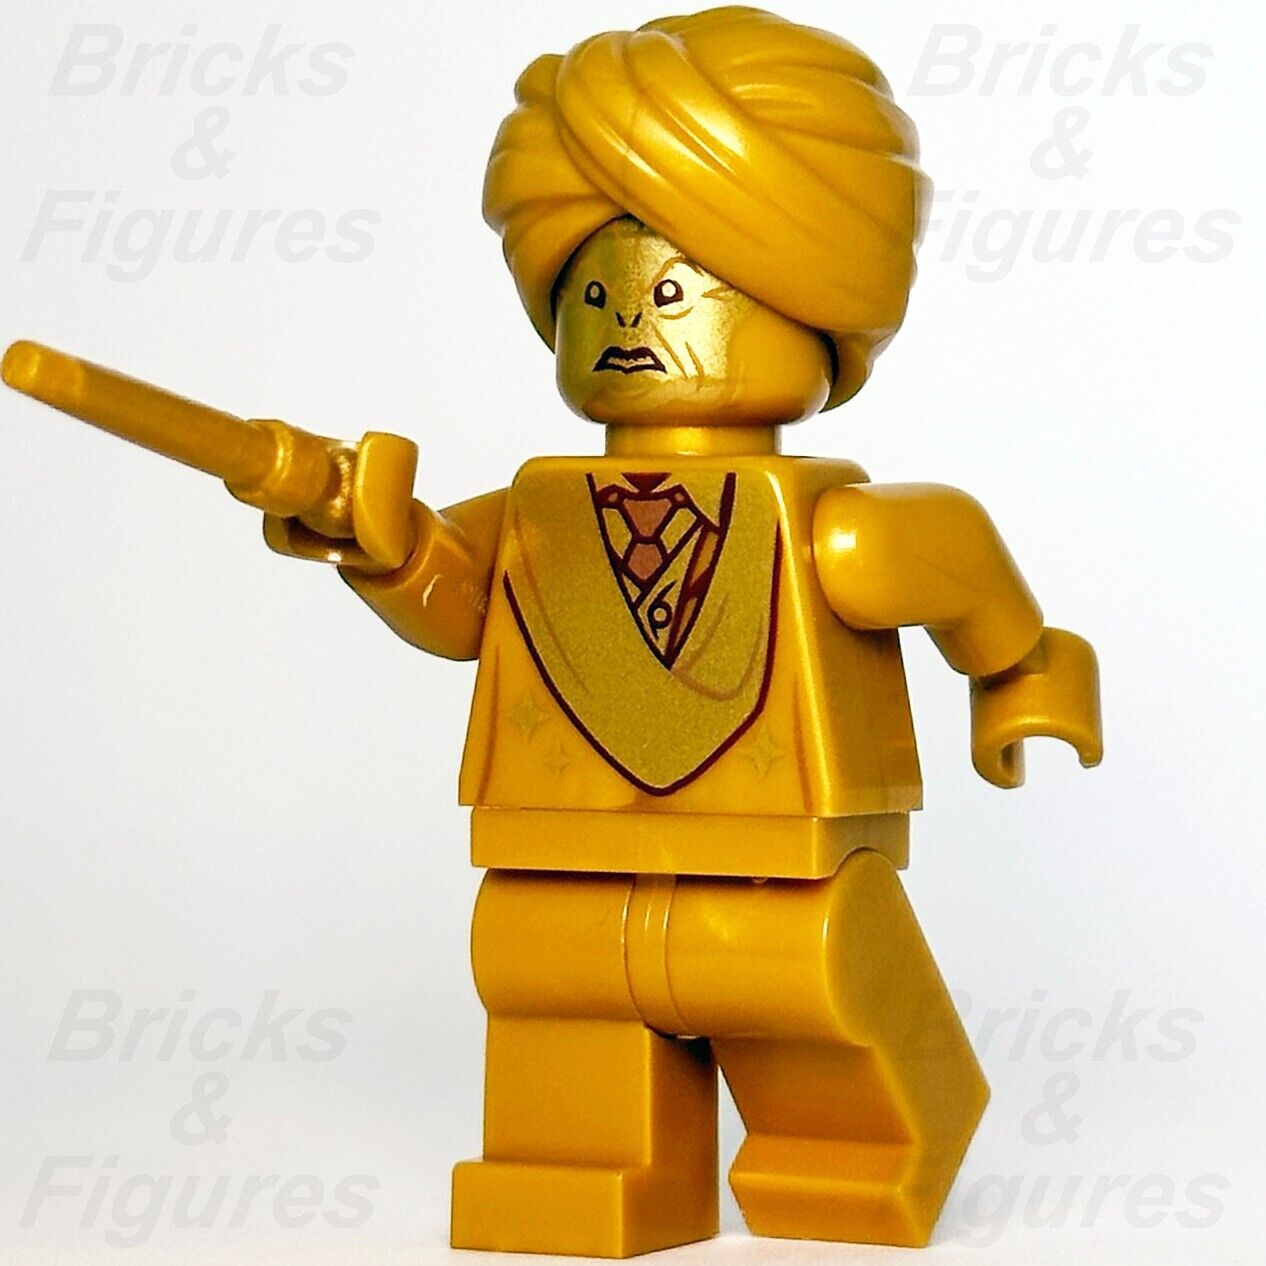 LEGO Professor Quirinus Quirrell Minifigure Harry Potter 20th Anniversary 76395 - Bricks & Figures